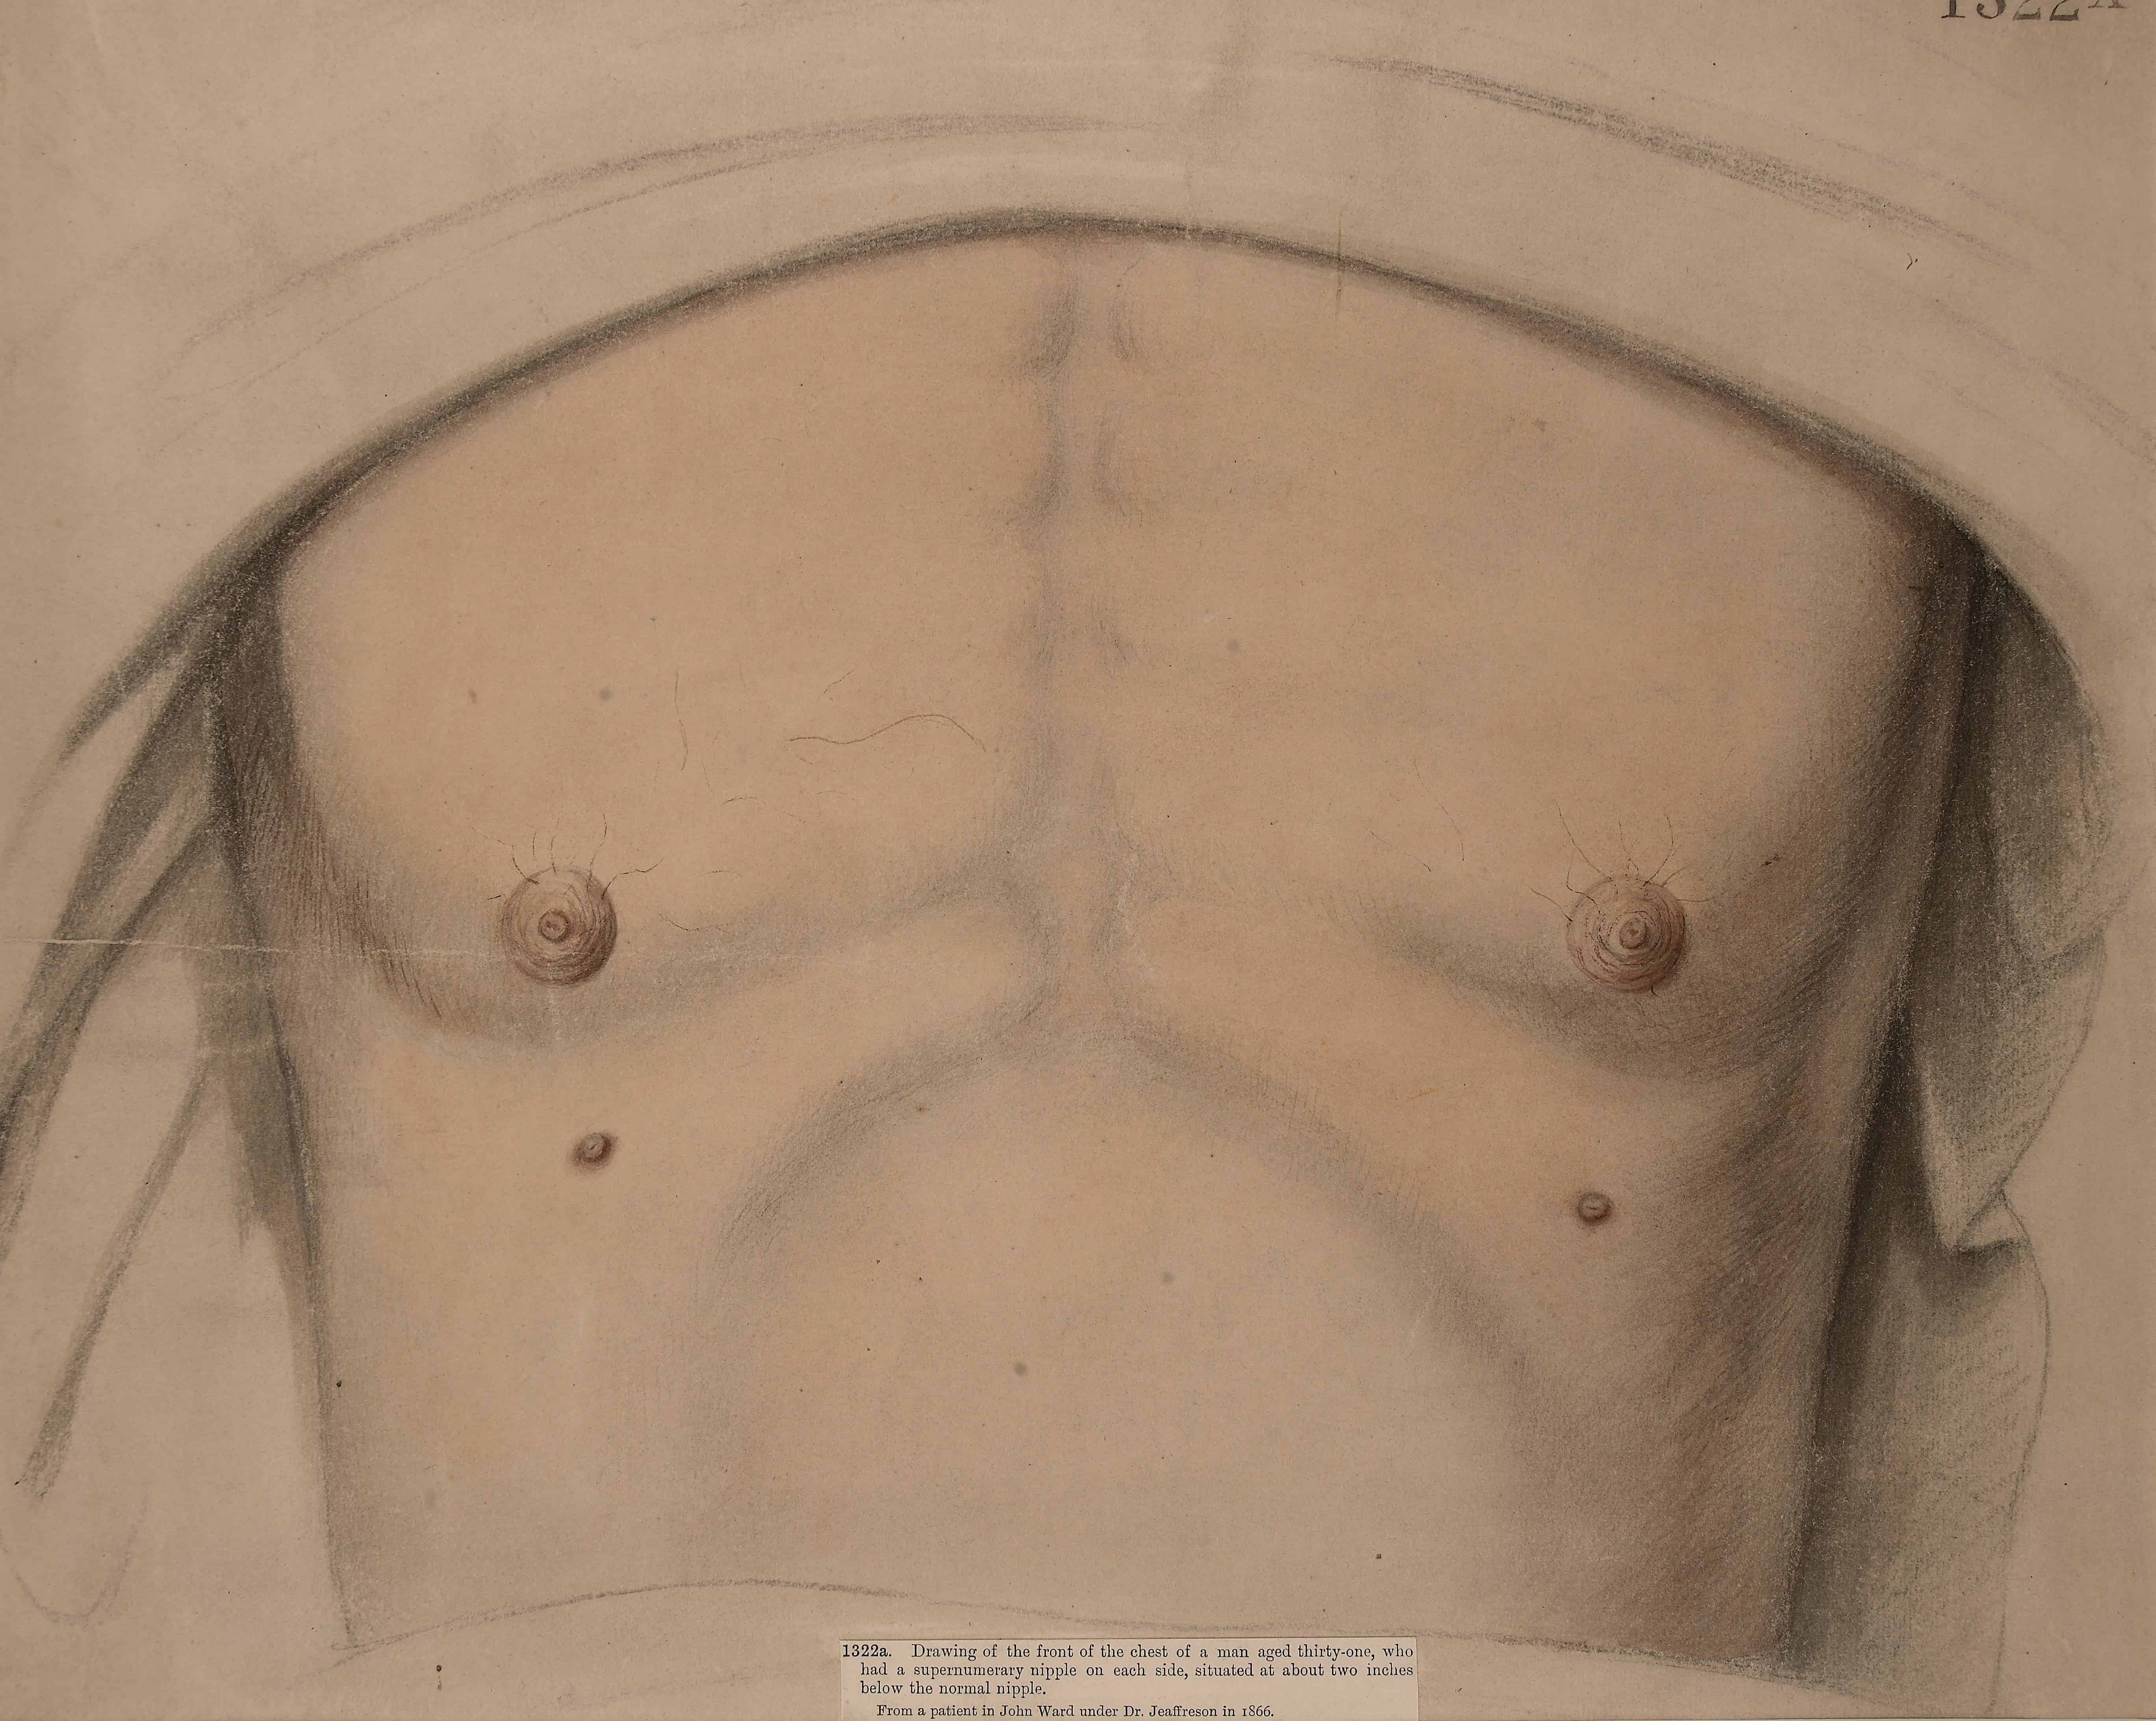 A man with extra nipples. Image credits: Thomas Godard.